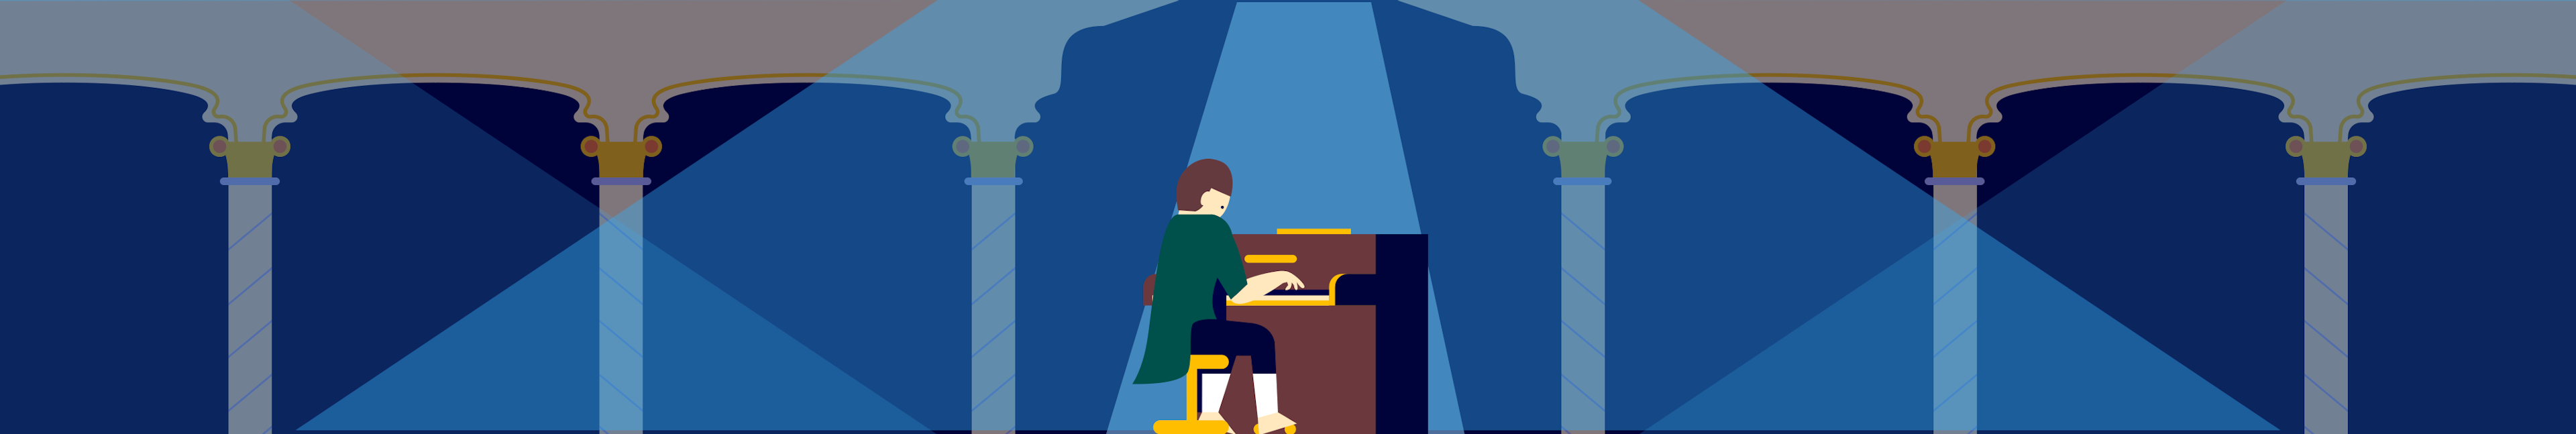 Diabelli : Sonatines pour piano seul